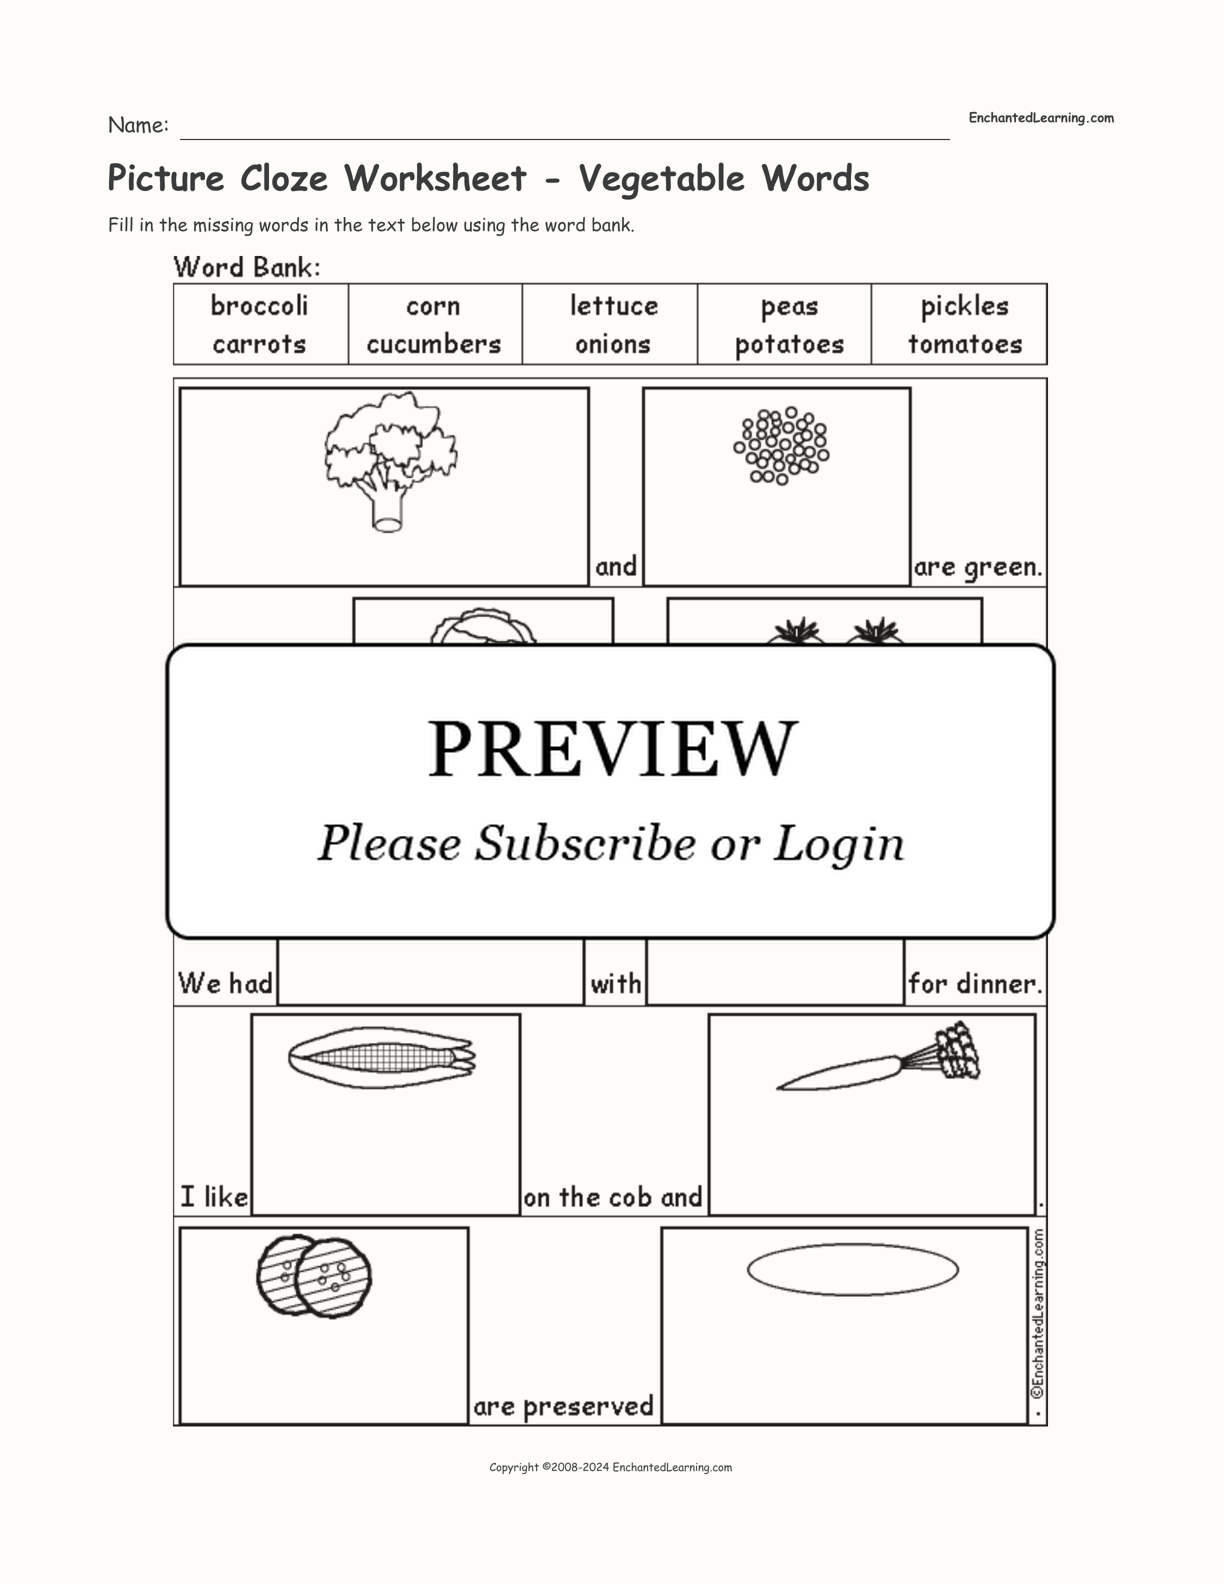 Picture Cloze Worksheet - Vegetable Words interactive worksheet page 1